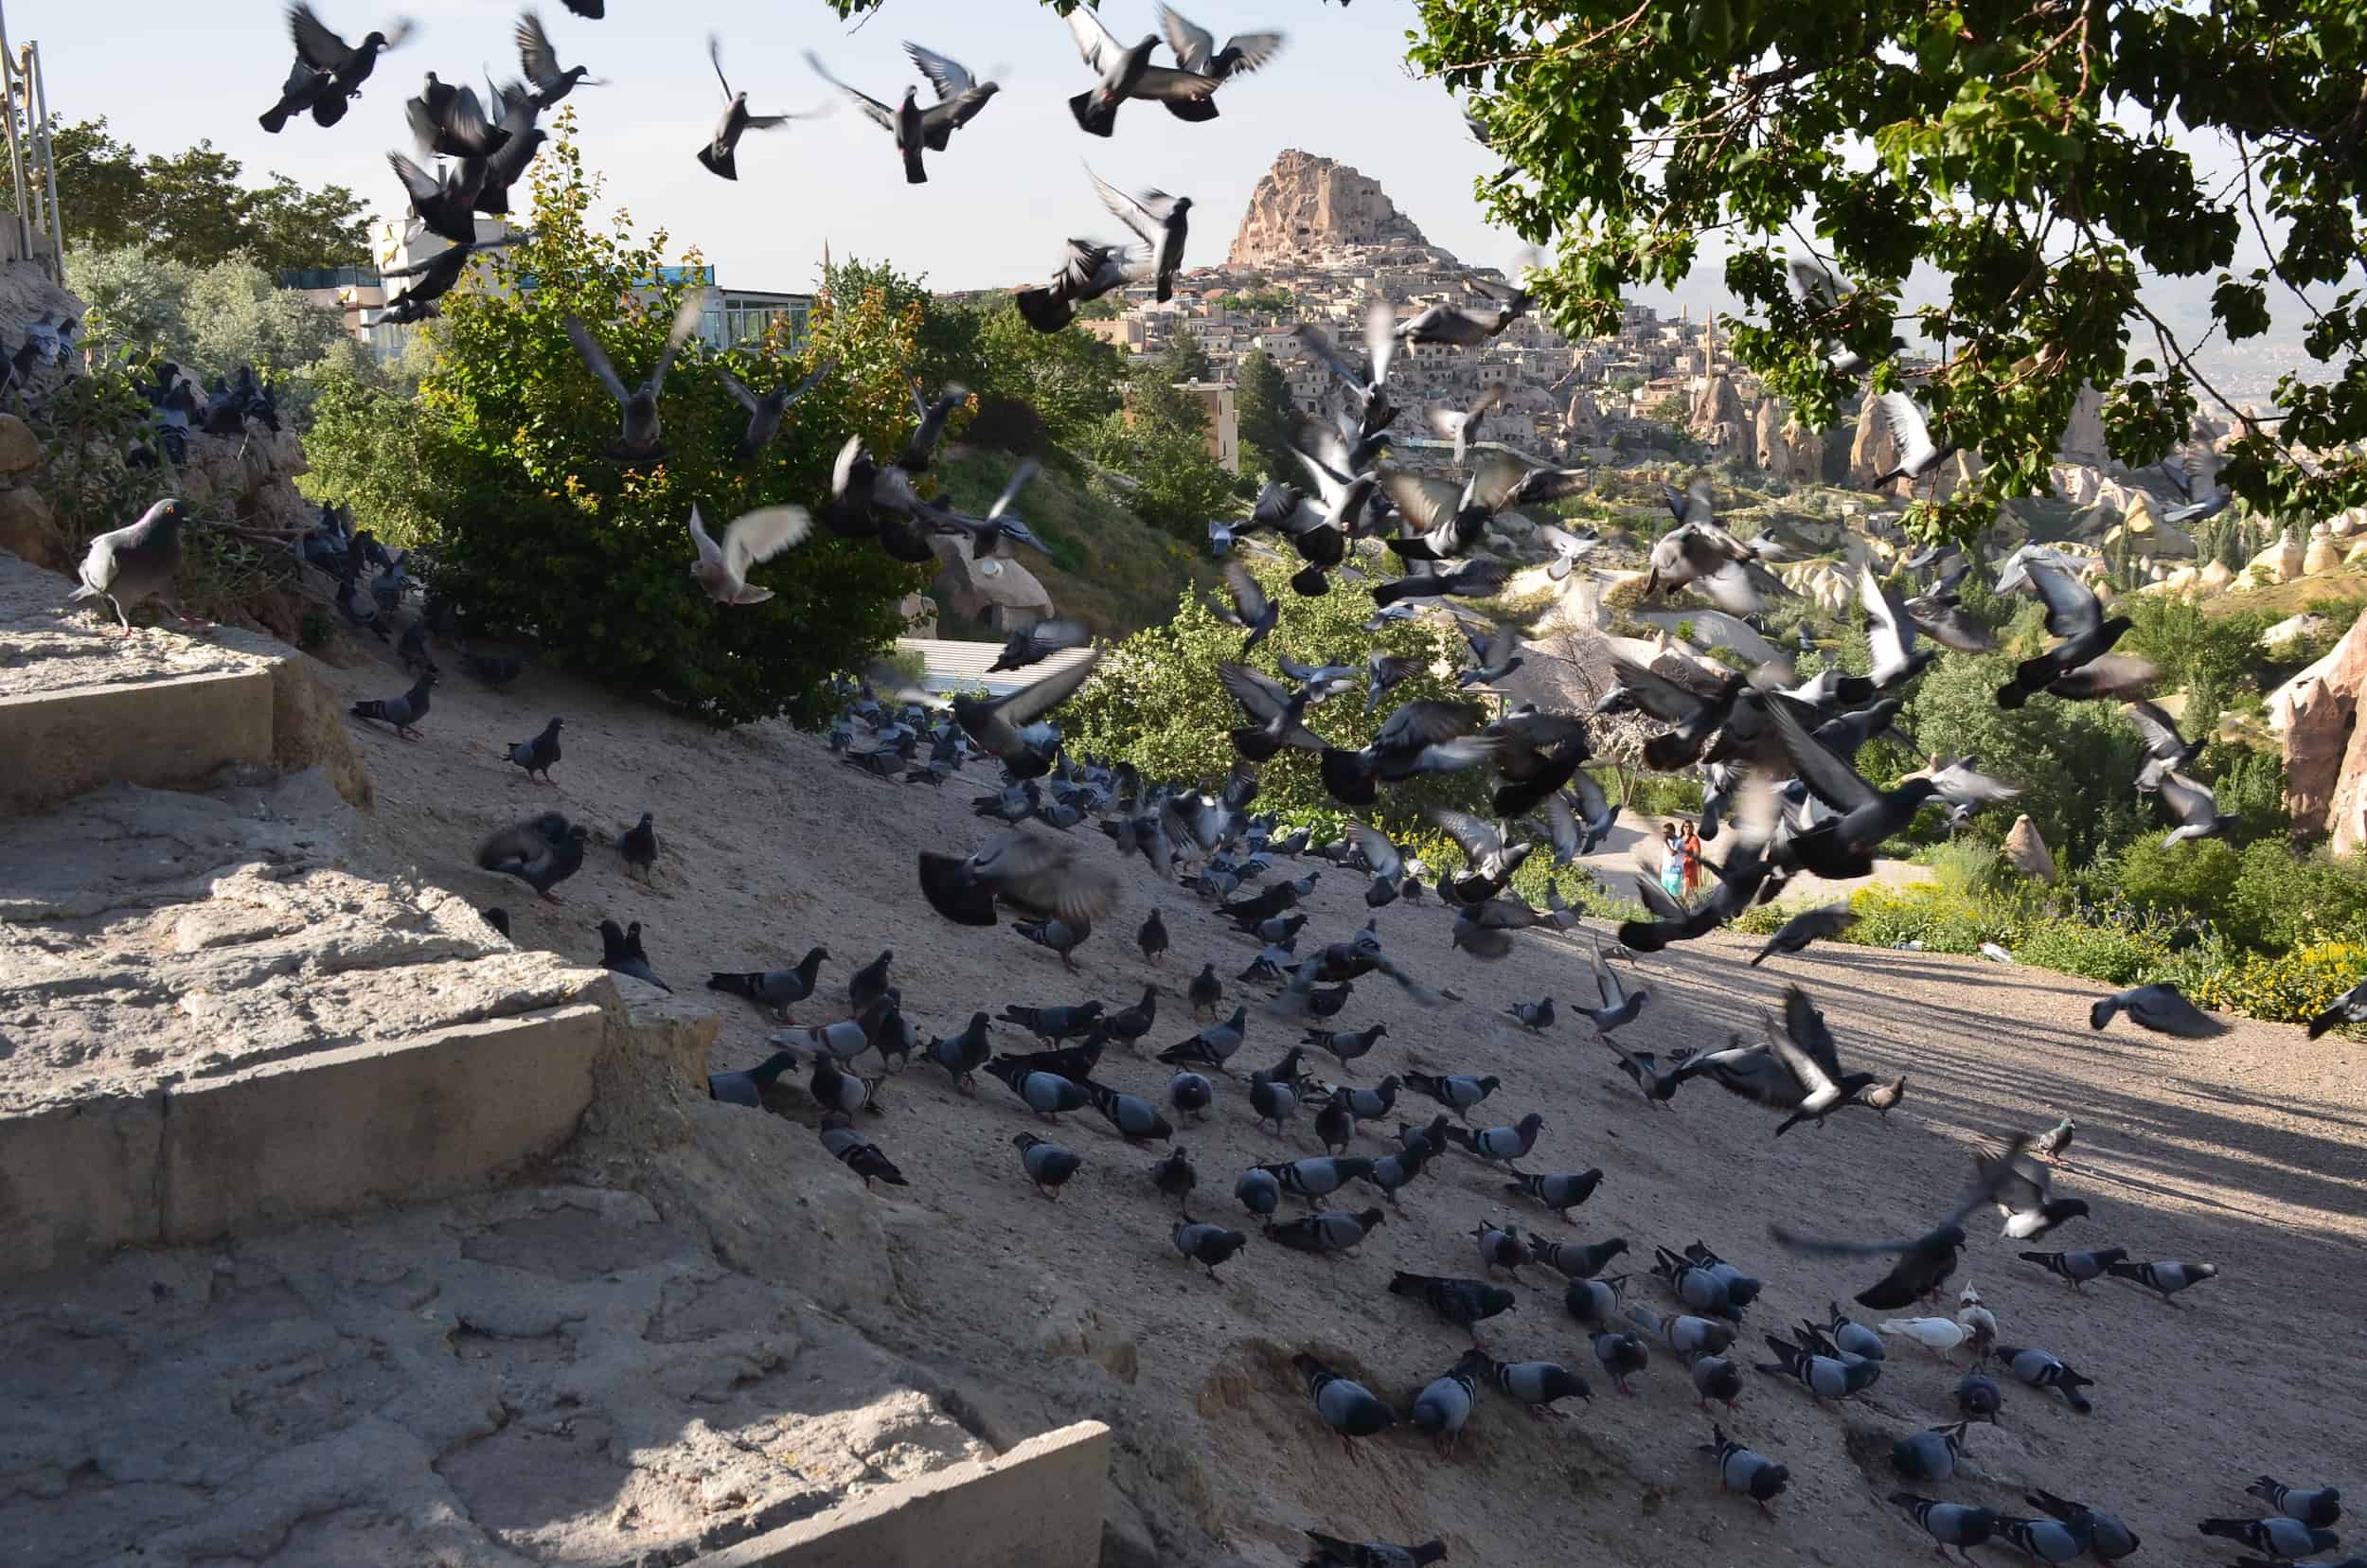 More pigeons!